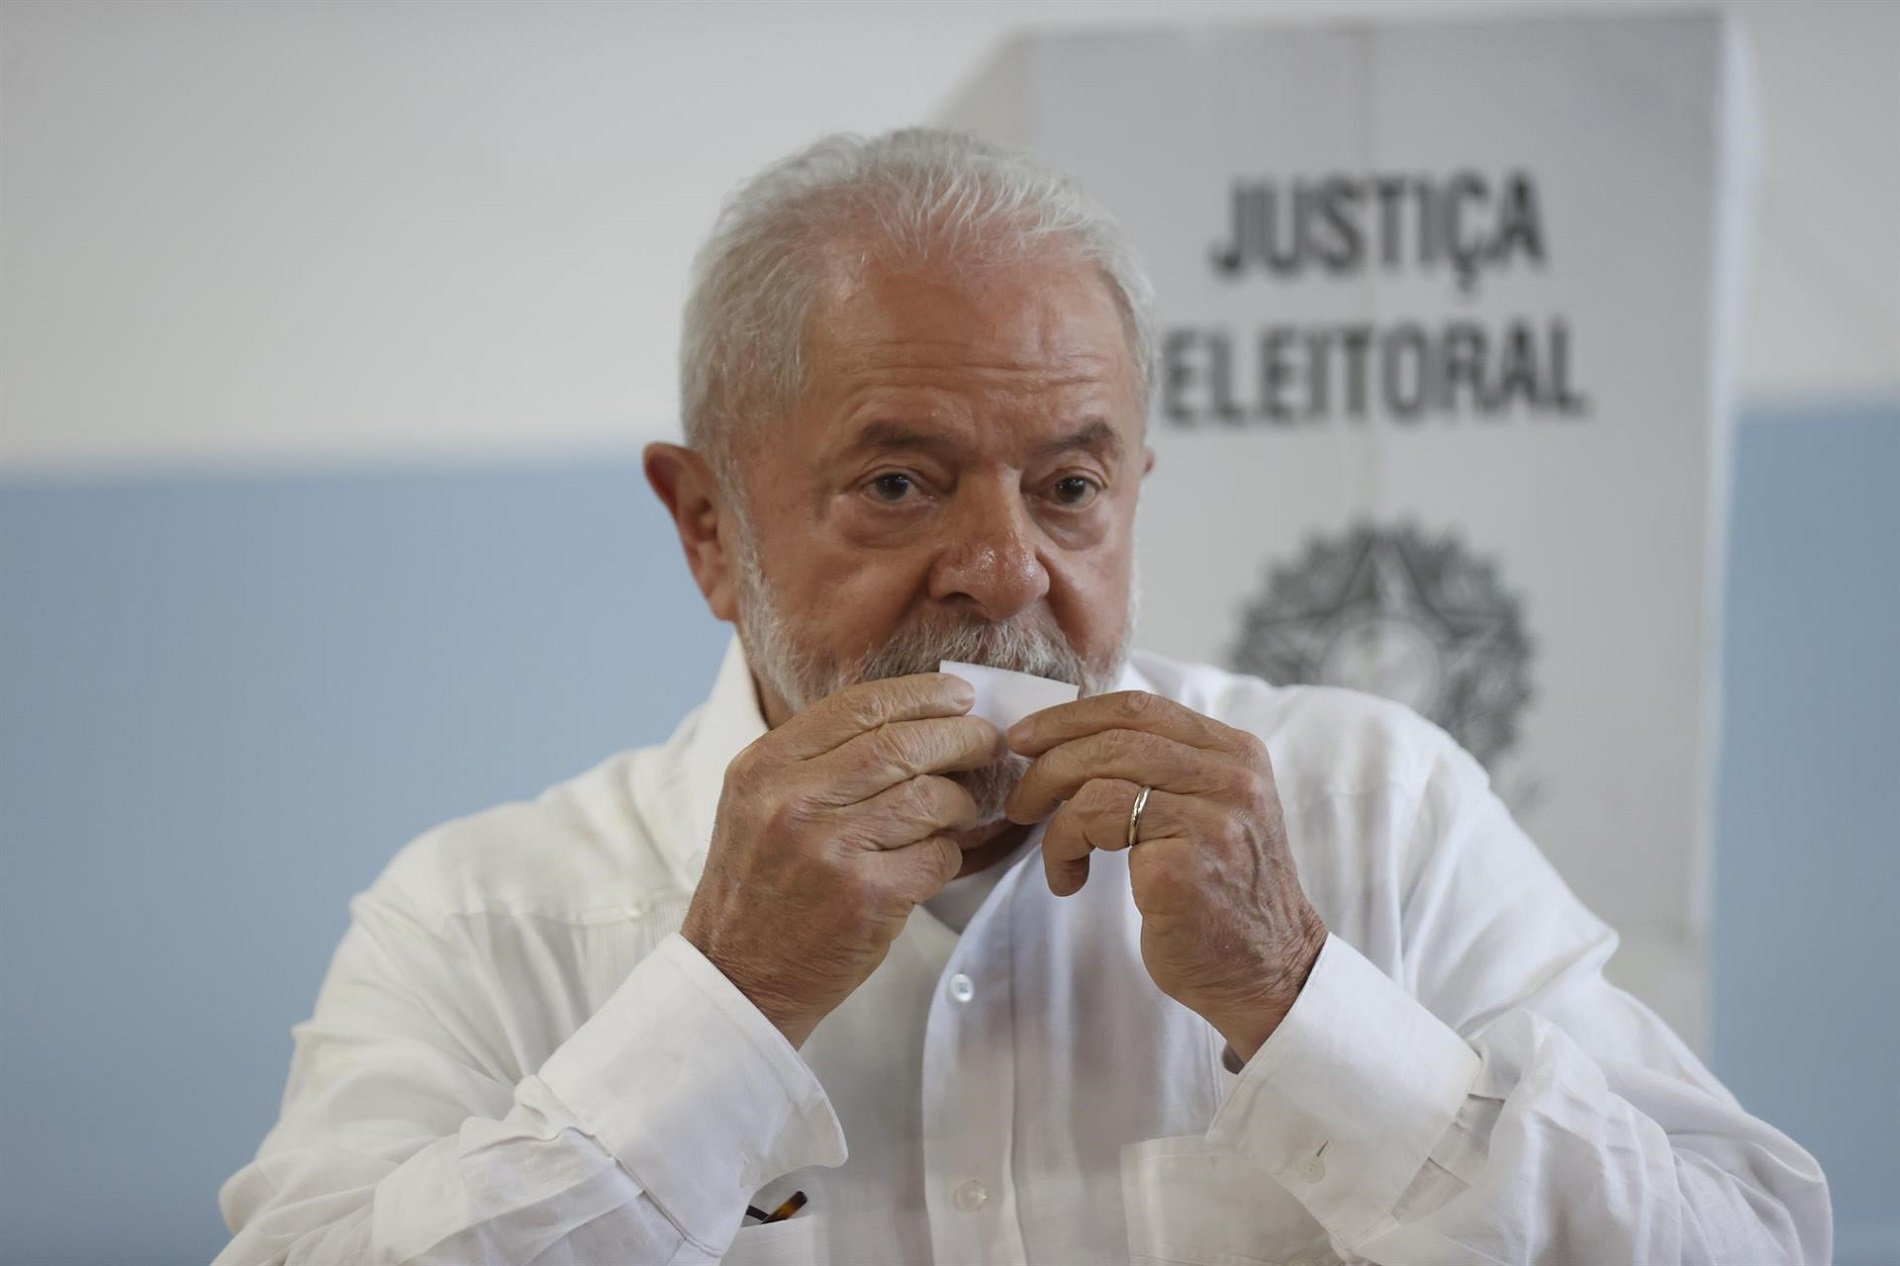 expresident de Brasil i candidat presidentcial Luiz Inácio Lula da Silva